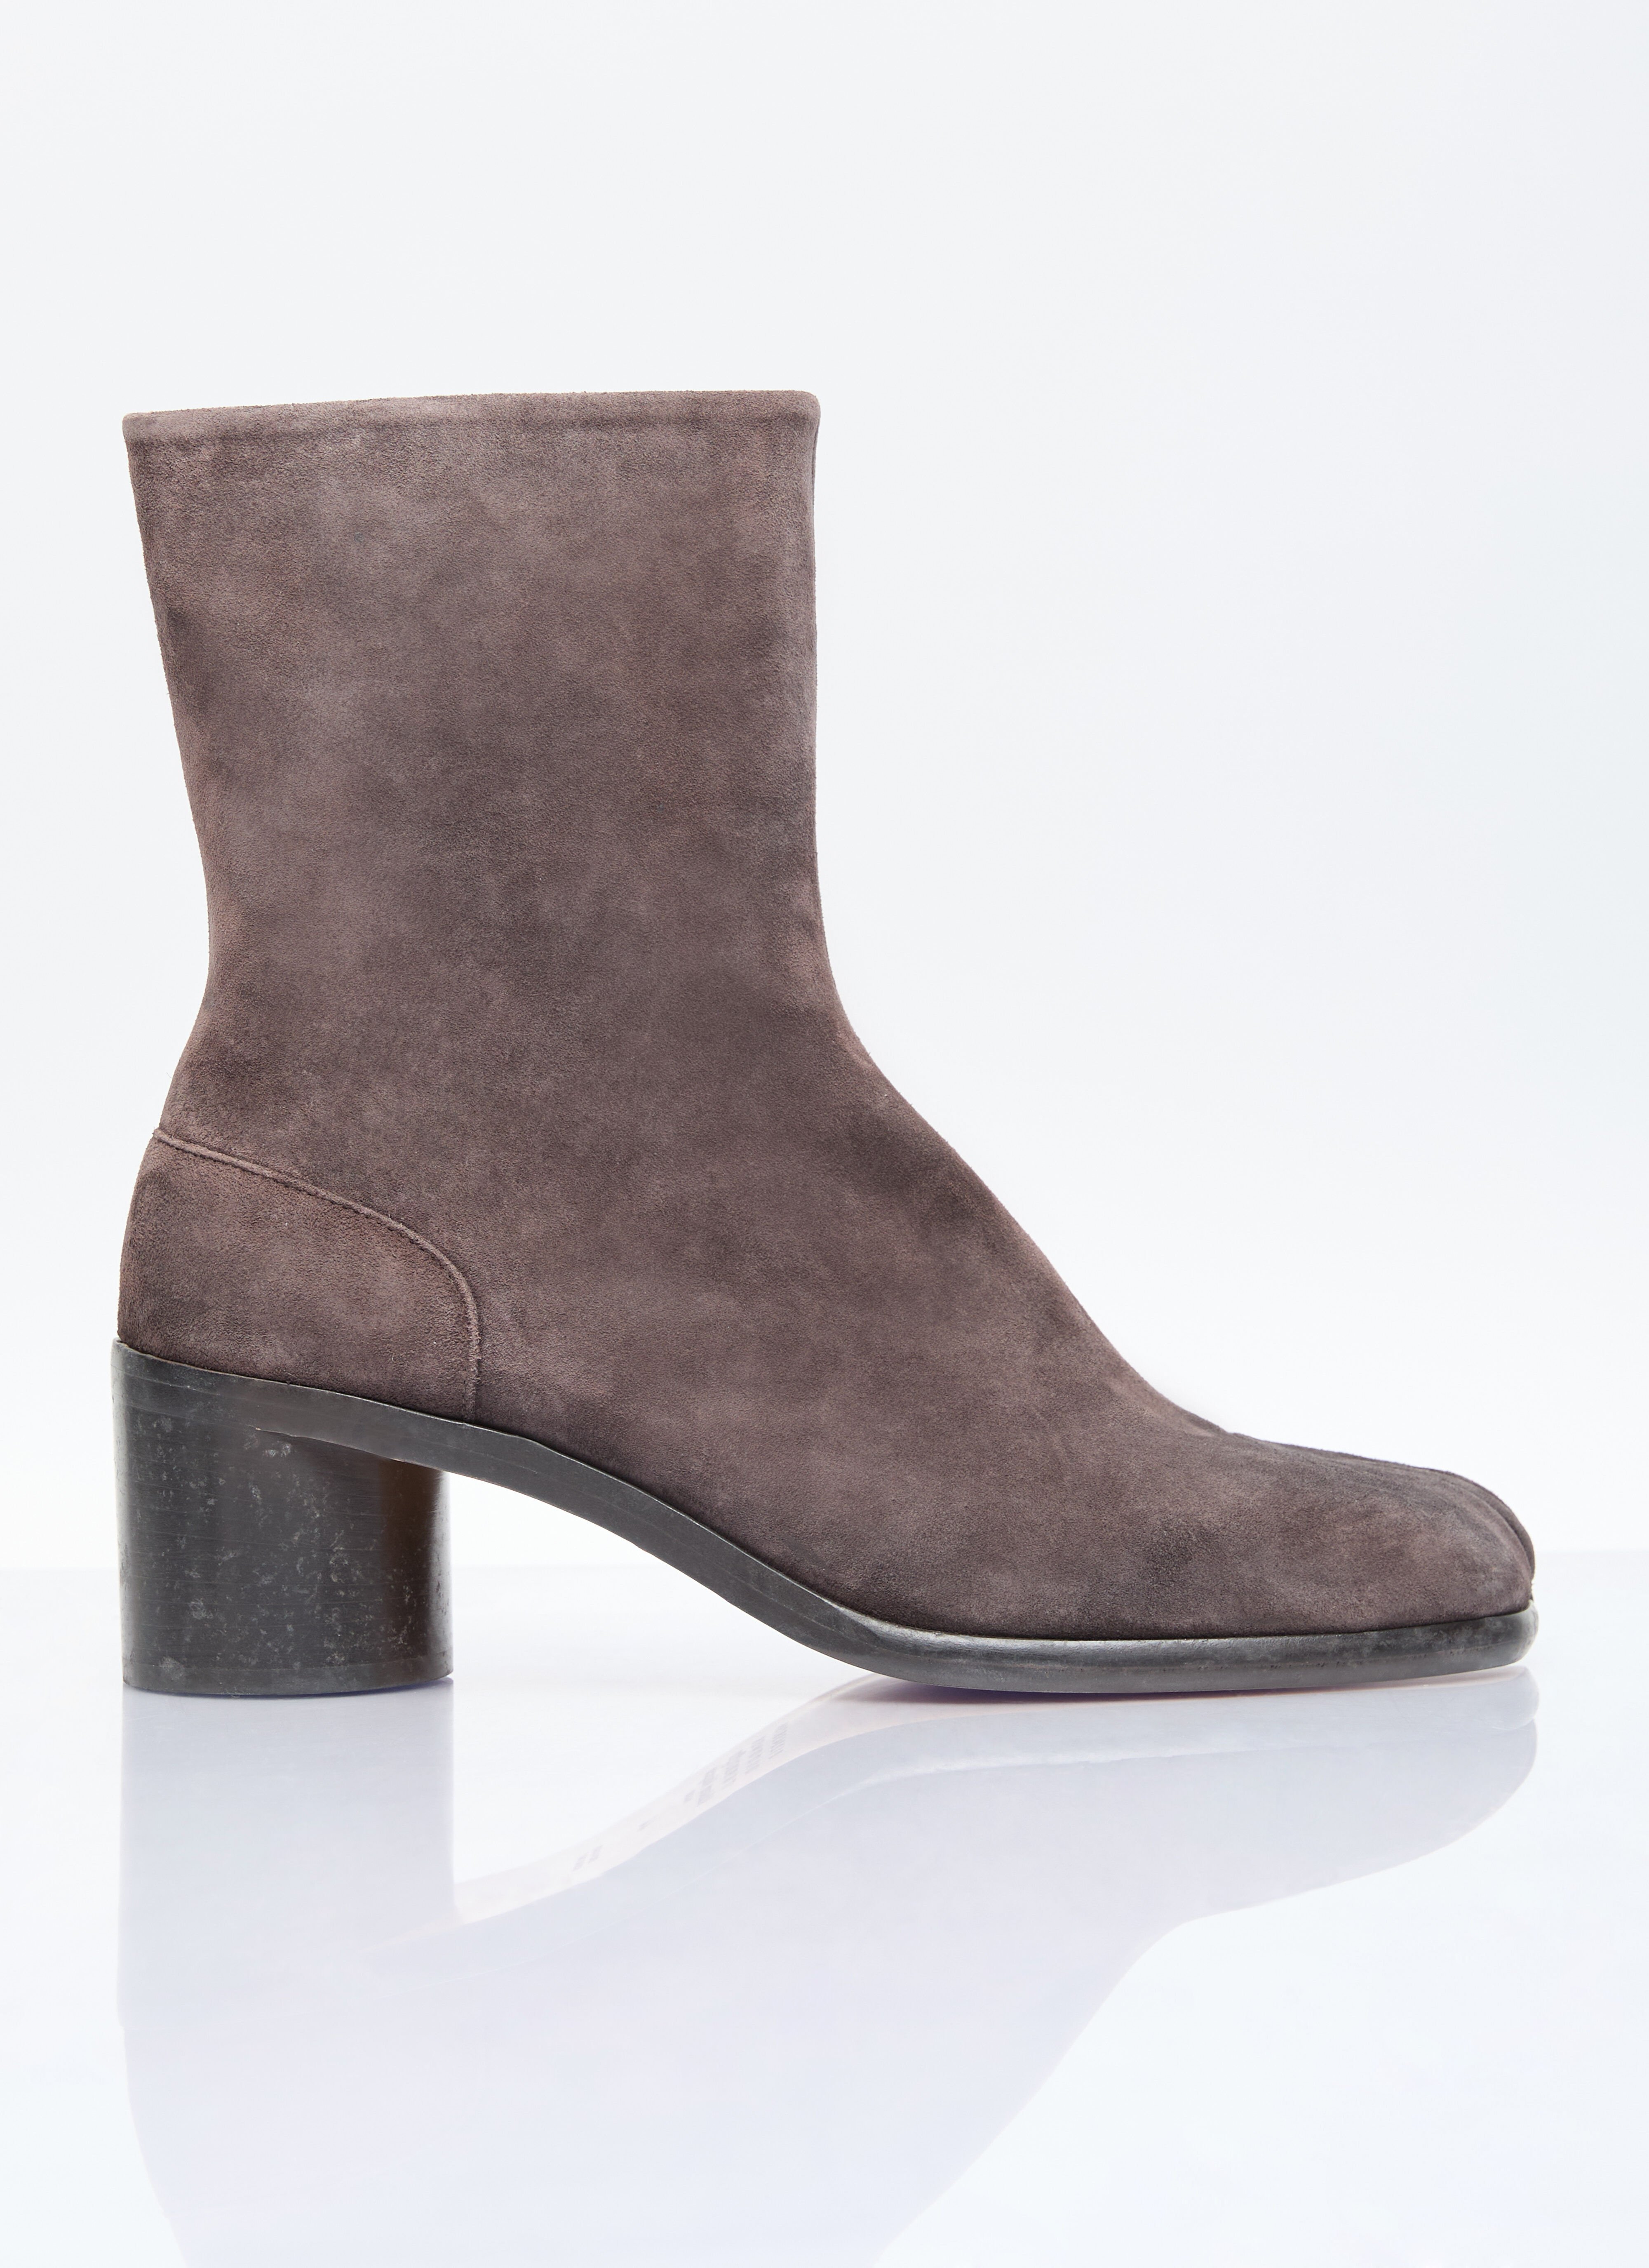 Vivienne Westwood Tabi Ankle Boots Grey vvw0156010